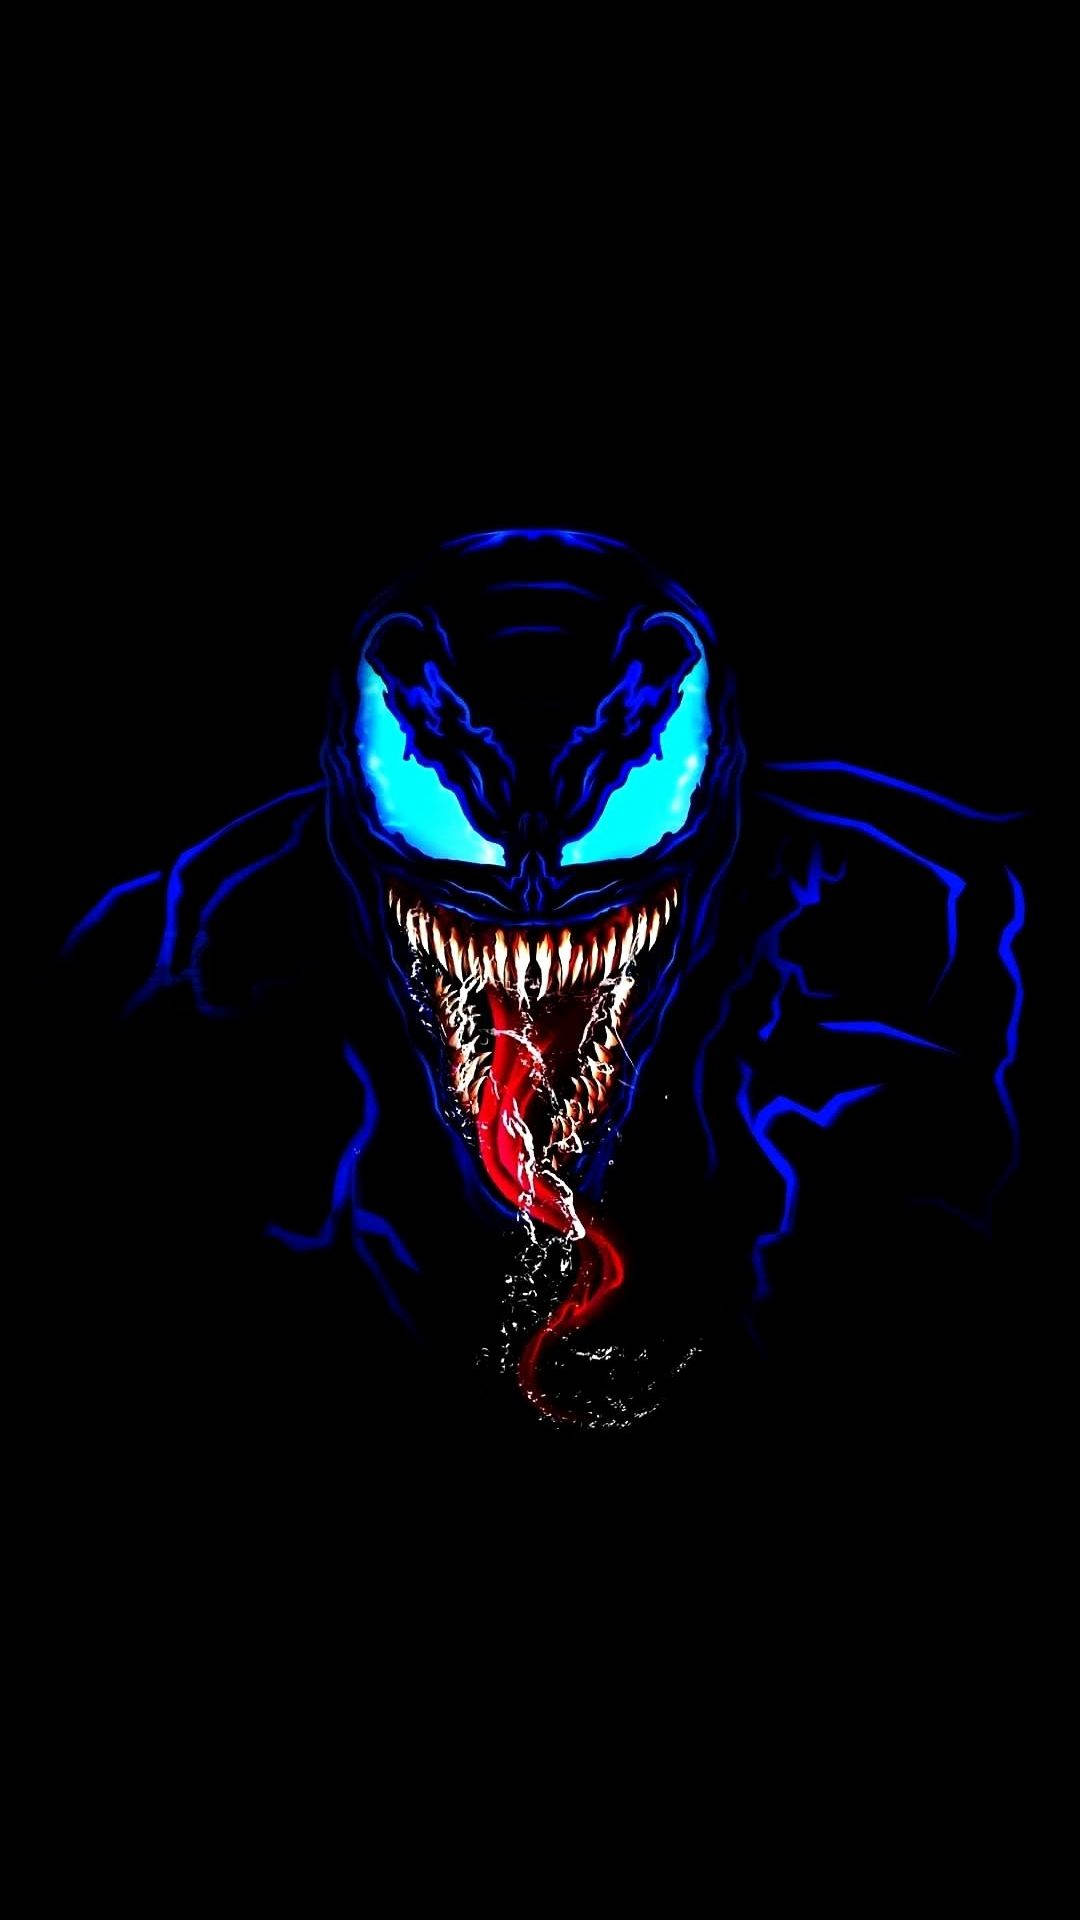 Caption: "Venom's Fury - Exclusive iPhone Wallpaper" Wallpaper